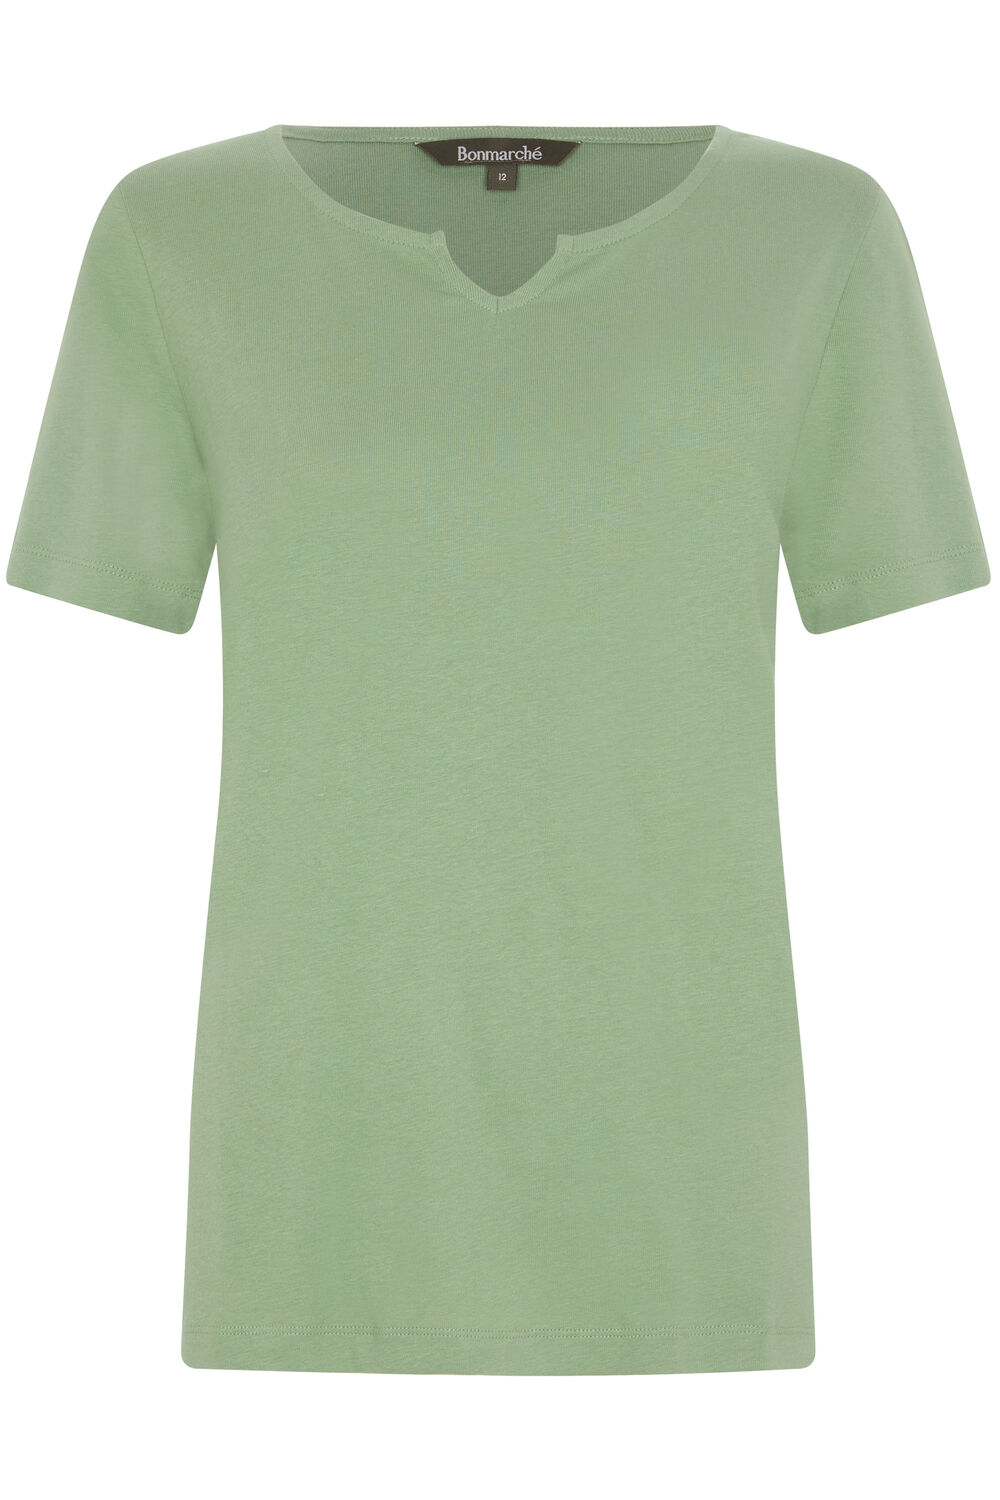 Bonmarche Khaki Short Sleeve Plain Notch Neck T-Shirt, Size: 24